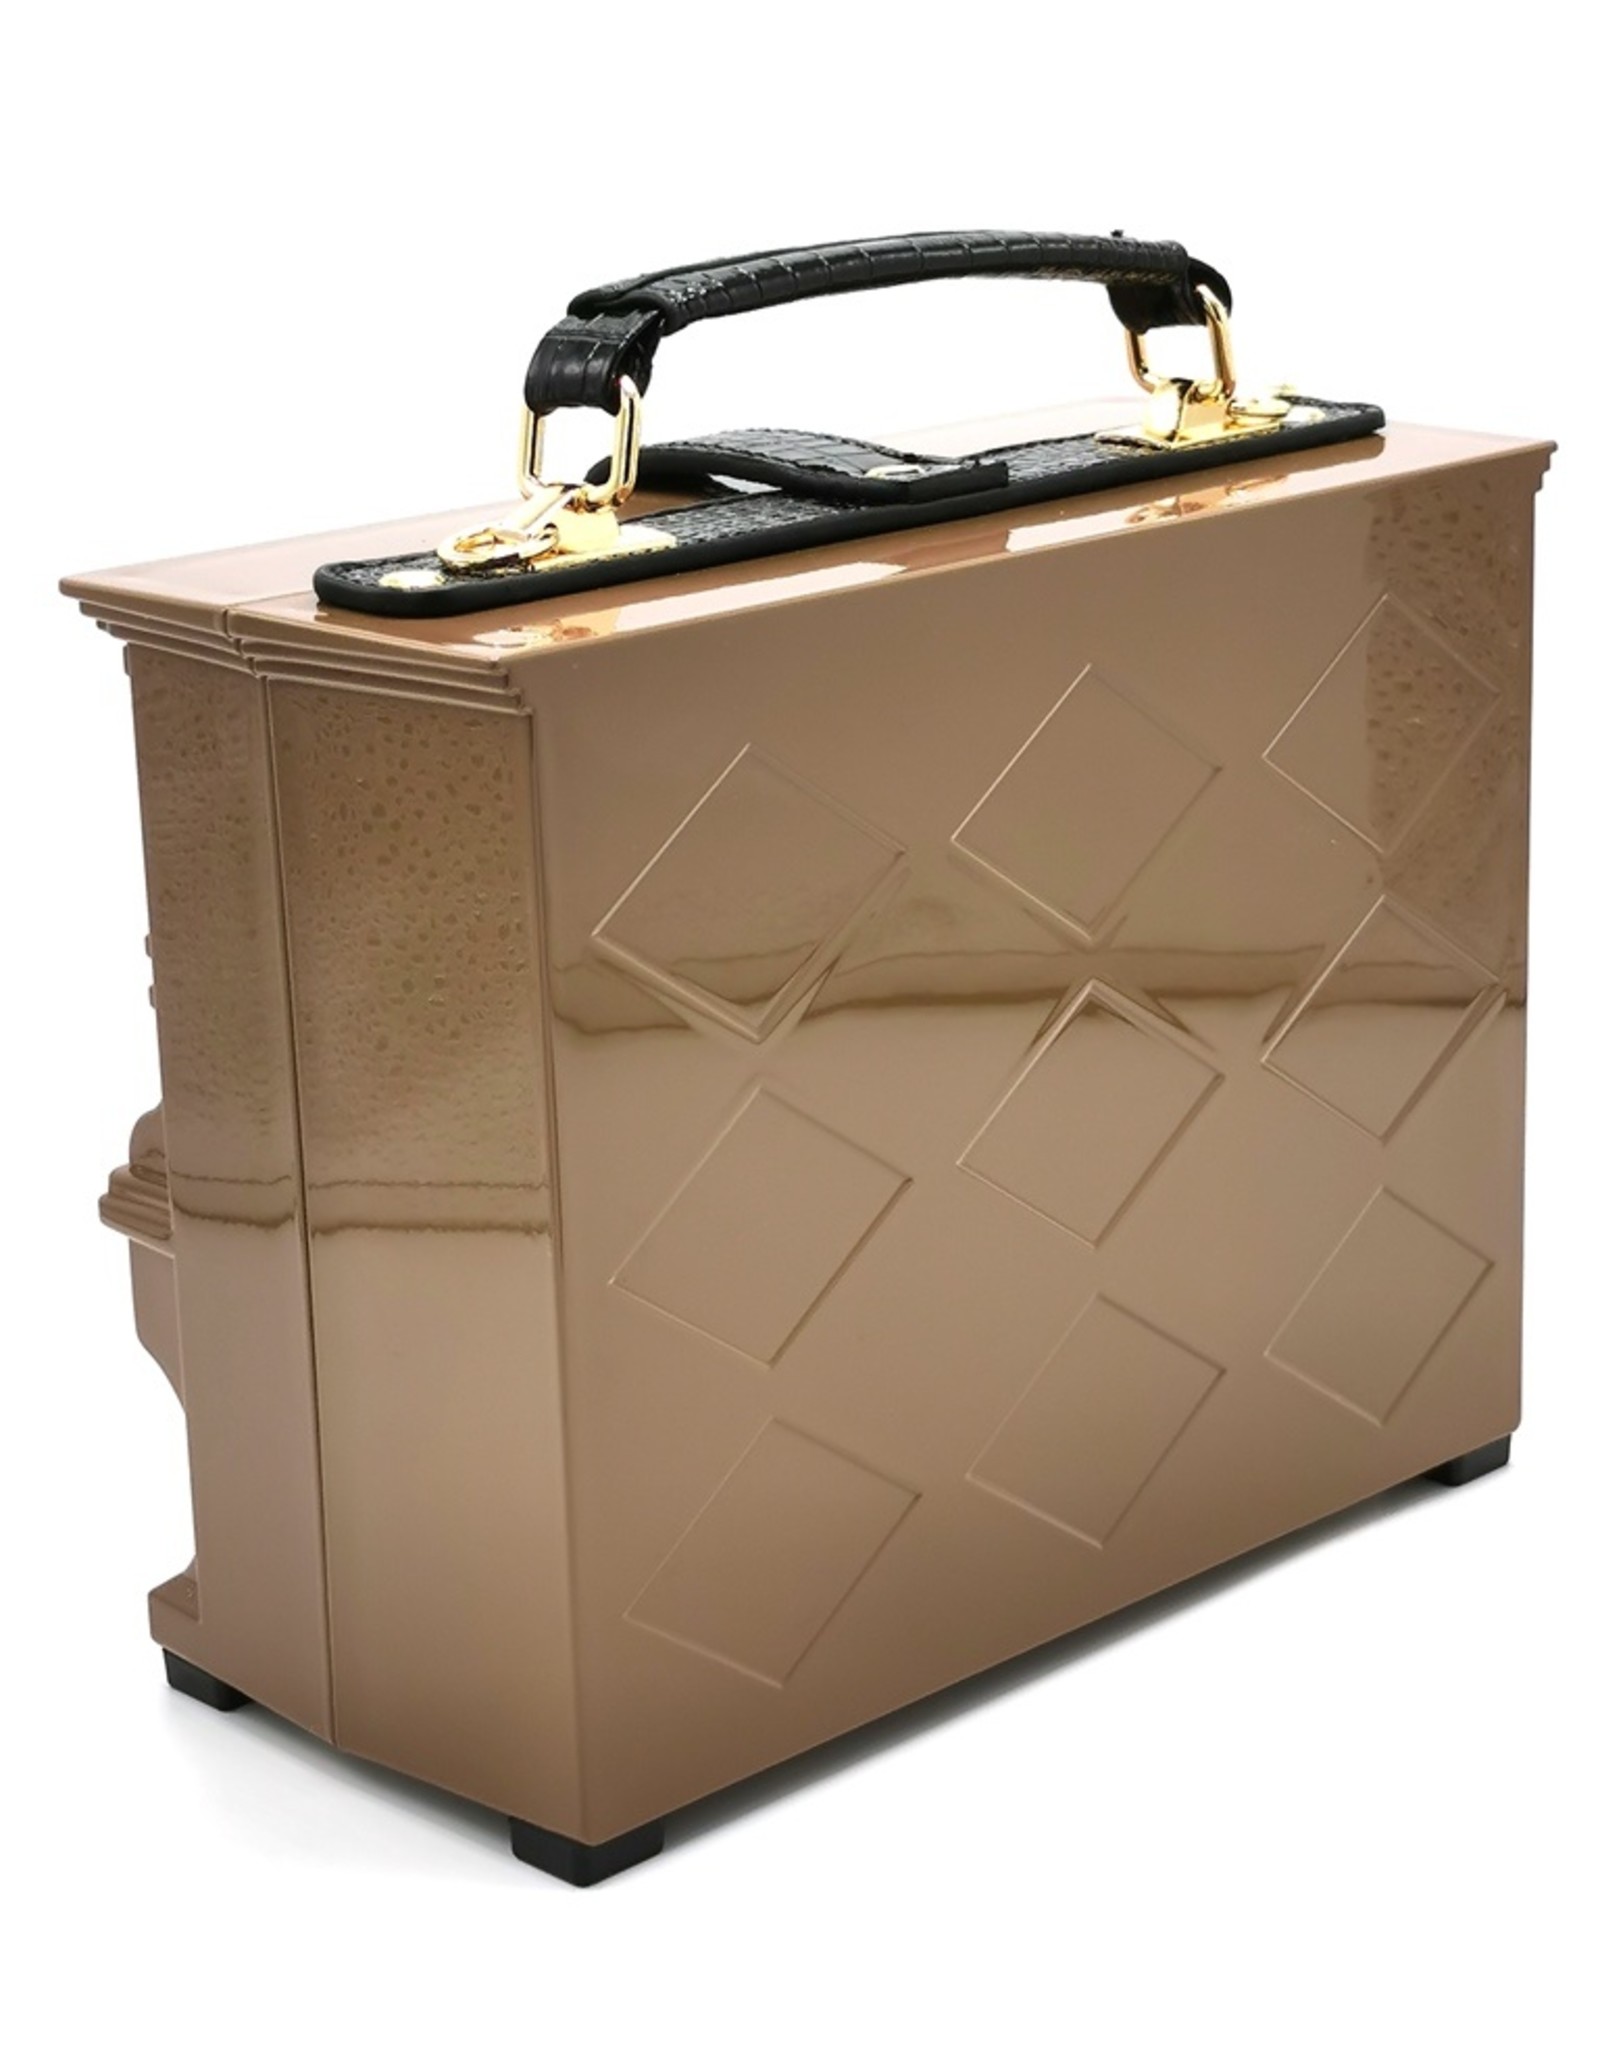 Magic Bags Fantasy bags - Piano Handbag in the shape of Real Piano tan